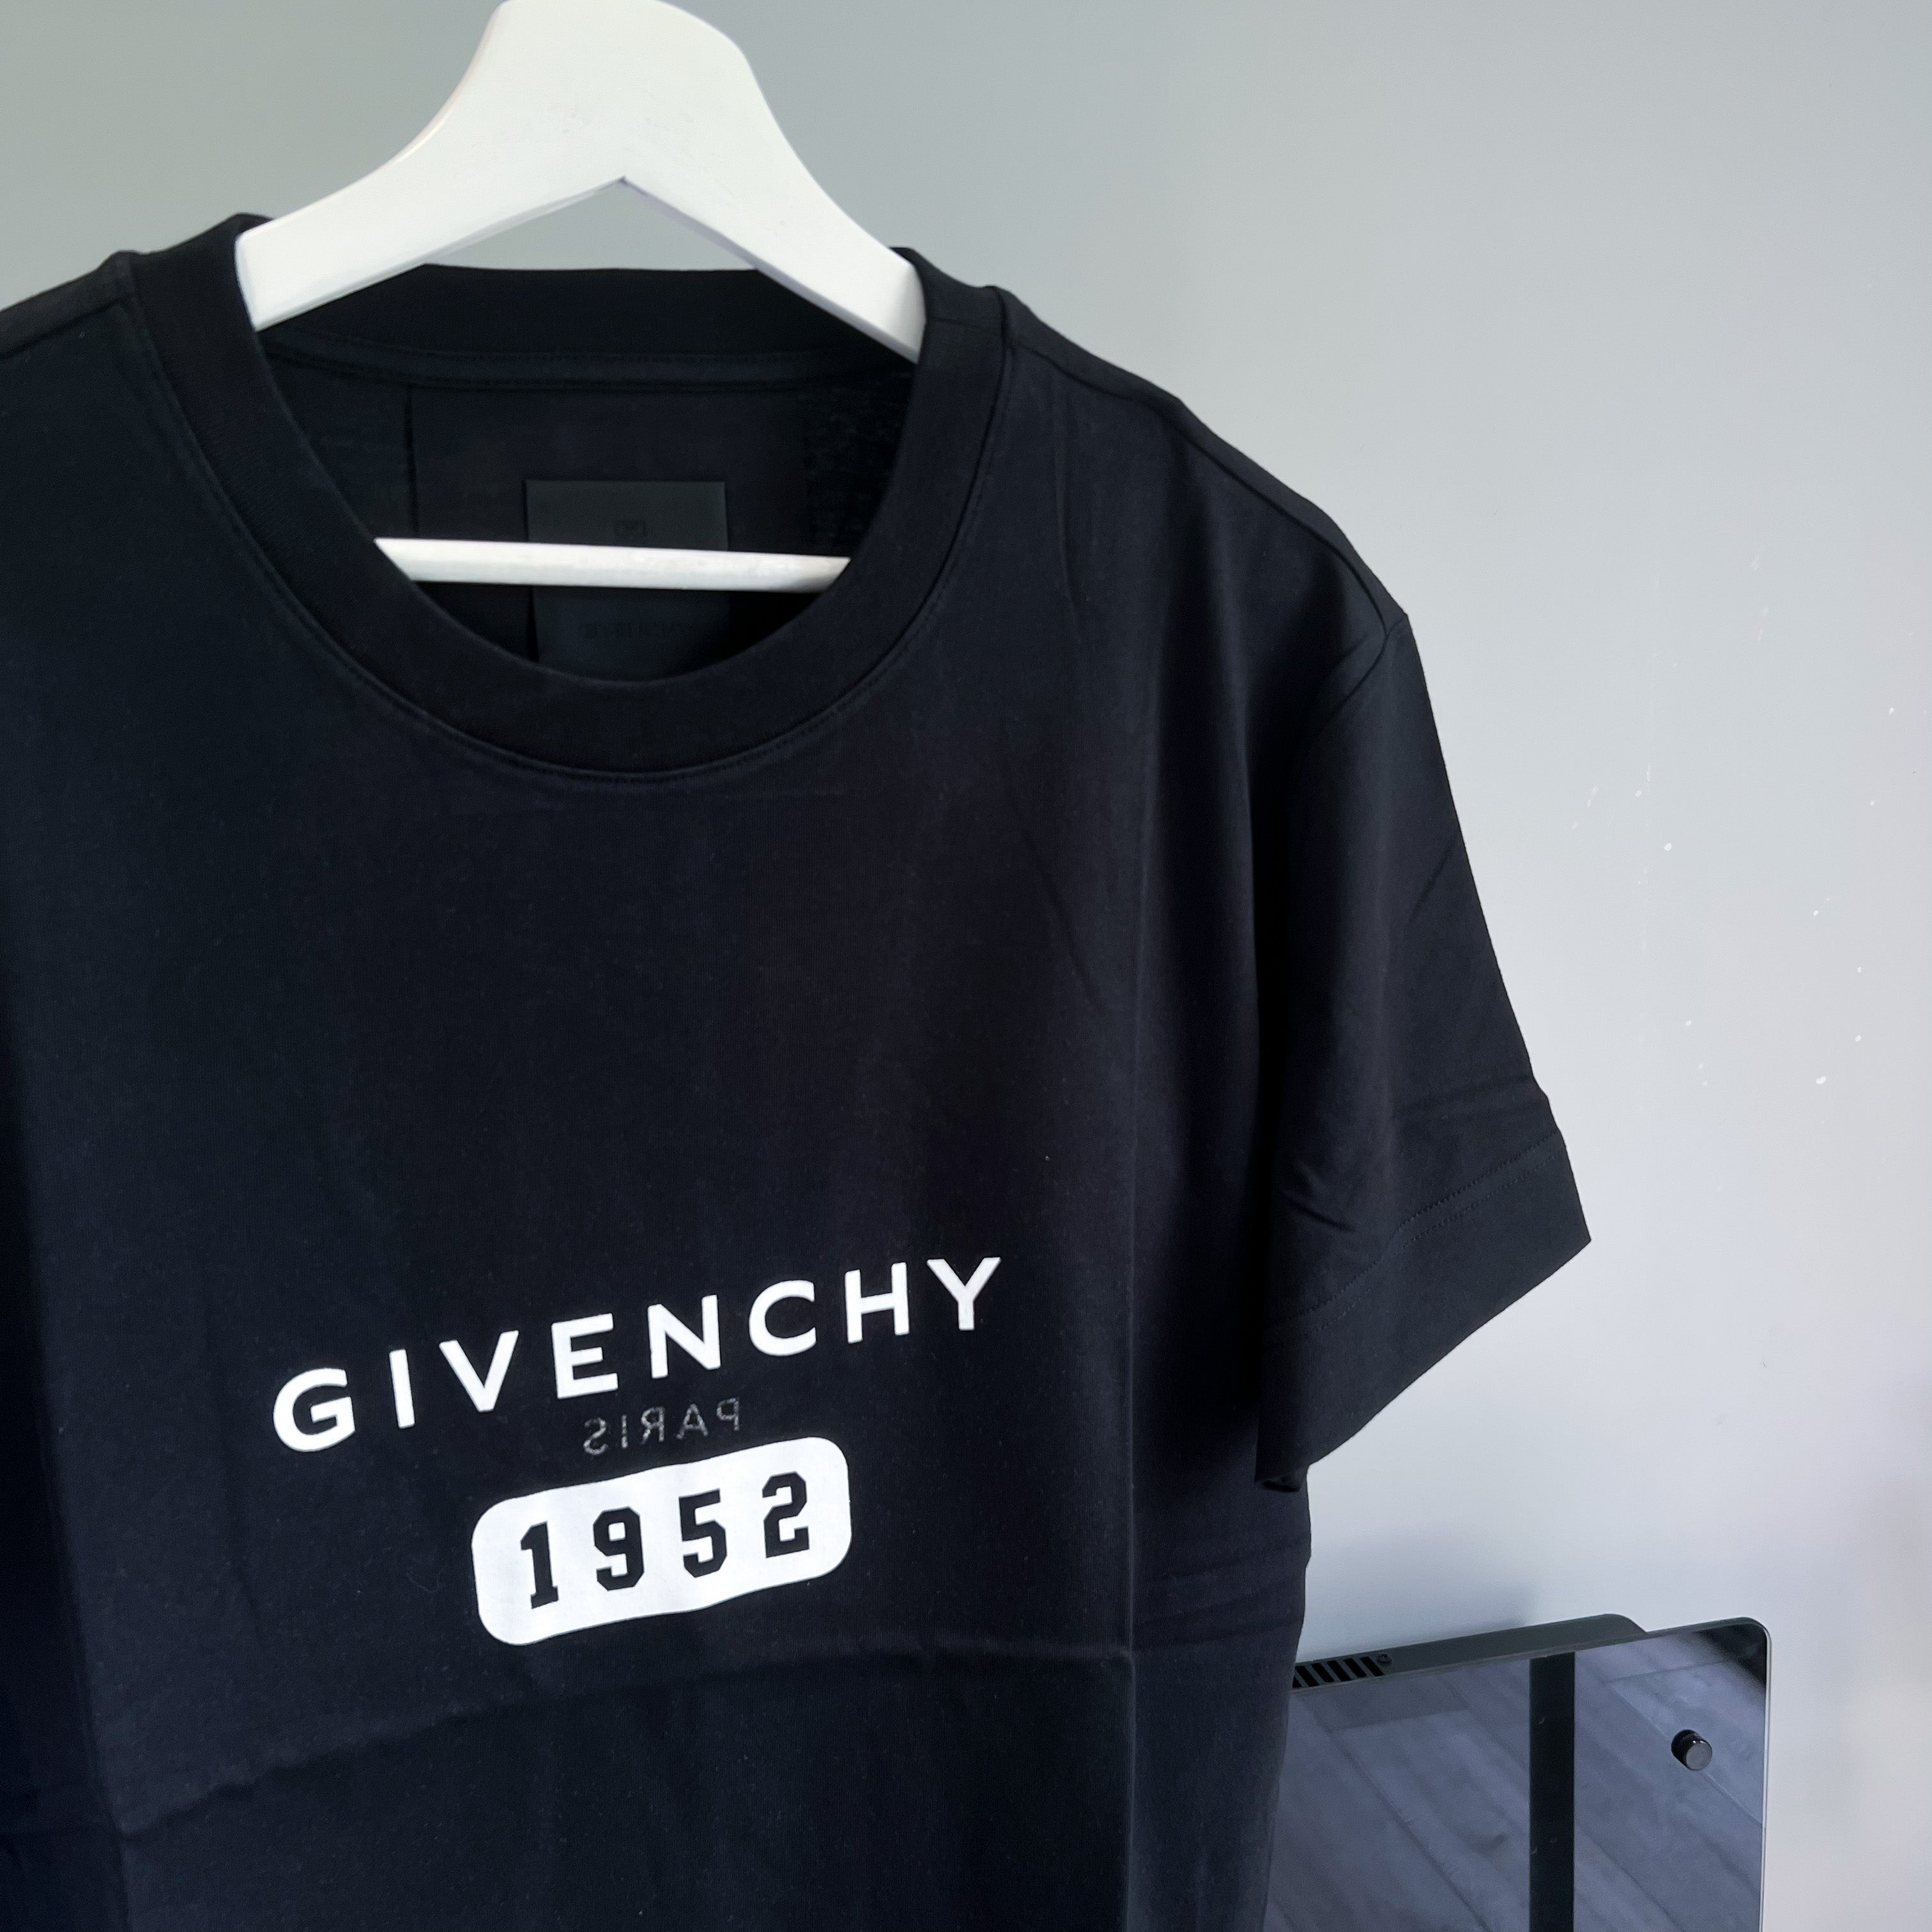 Givenchy 1952 Tee - Black